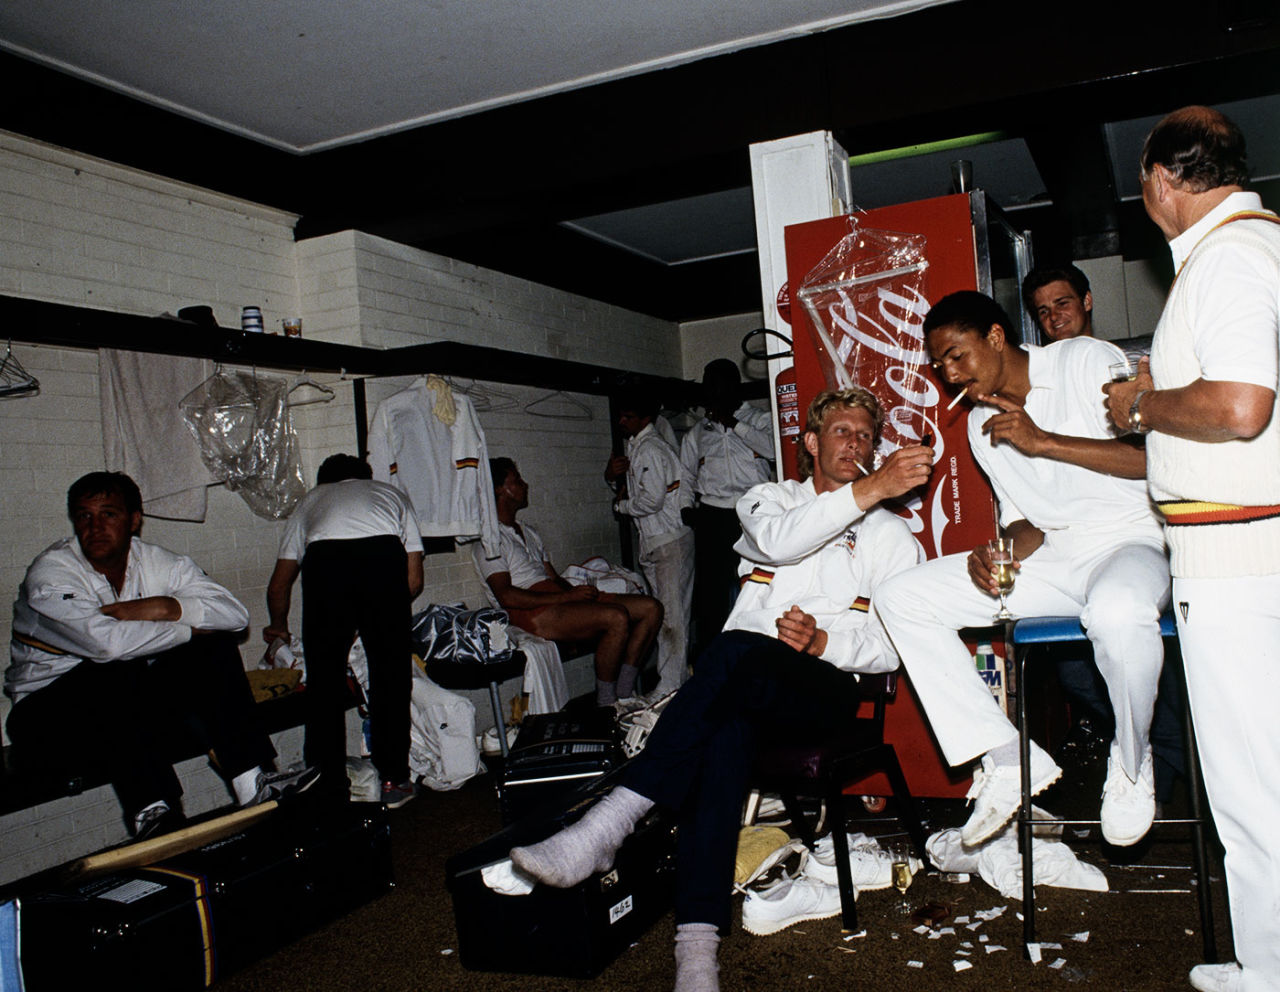 Graham Dilley lights a cigarette for Phil DeFreitas, England v Australia, 1st Test, Brisbane, 5th day, November 19, 1986